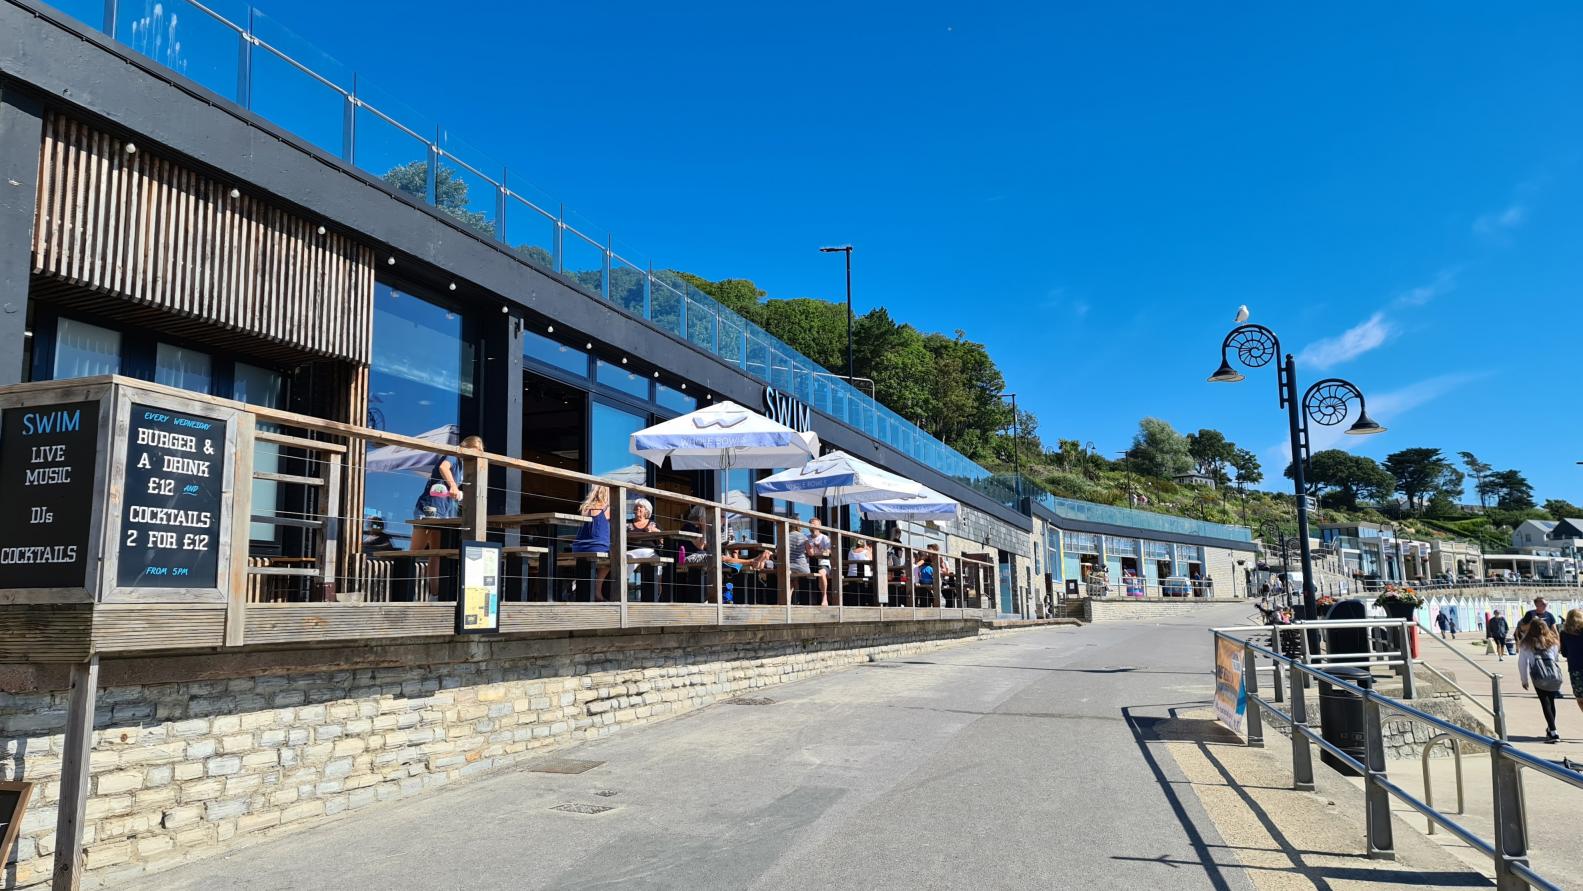 Outside Swim Cafe Bar Lyme Regis